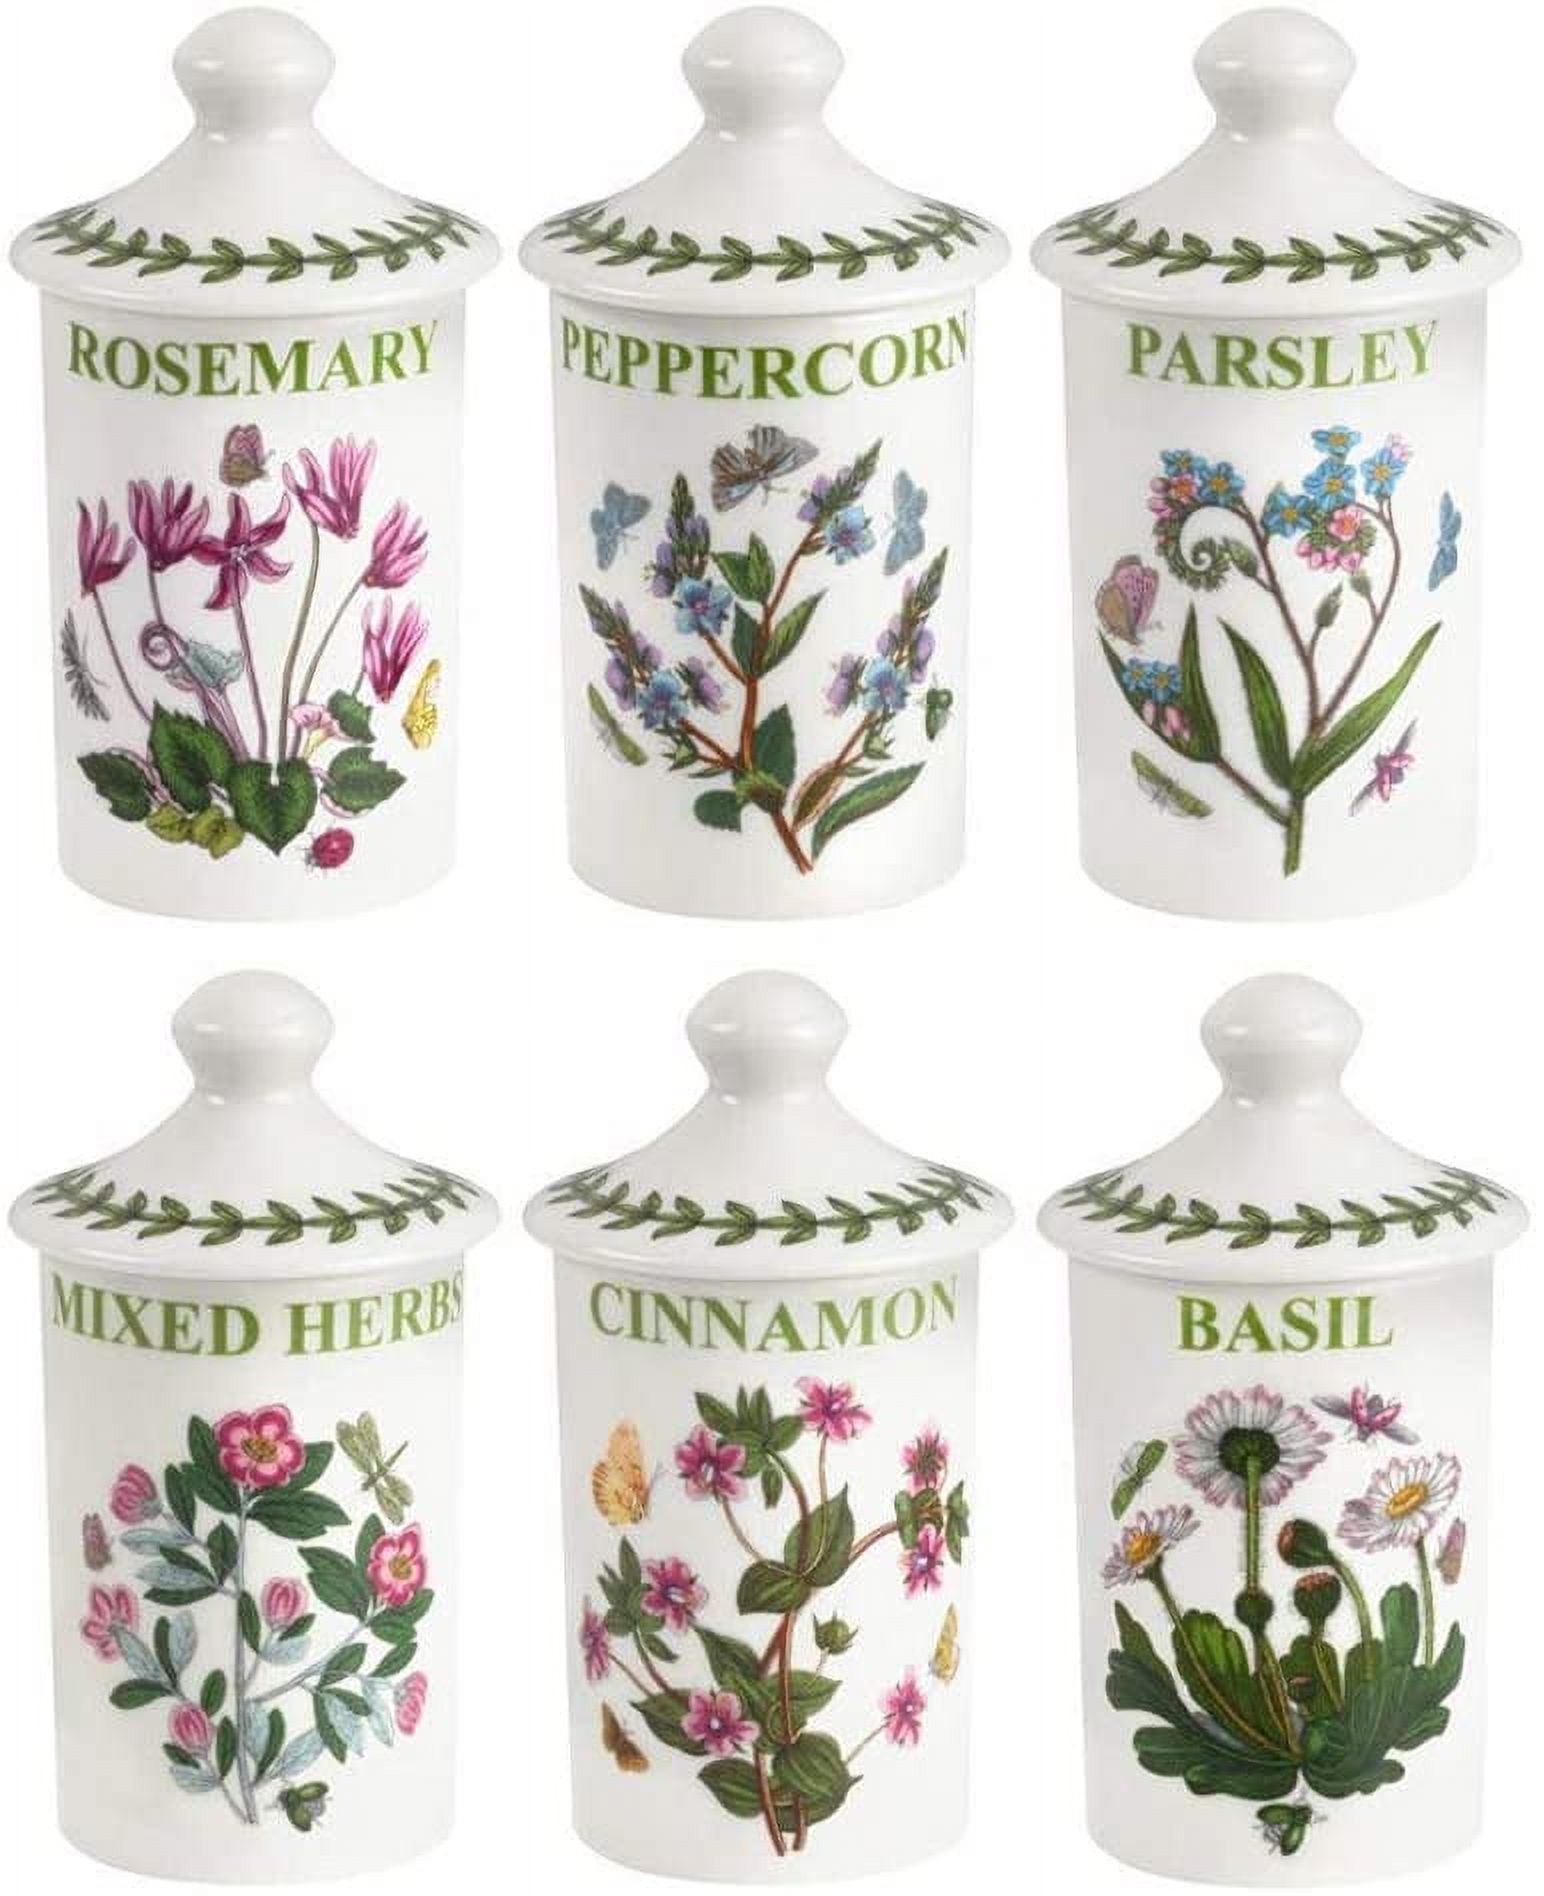 Portmeirion Botanic Garden Assorted Spice Jars, Set of 6 - image 1 of 6